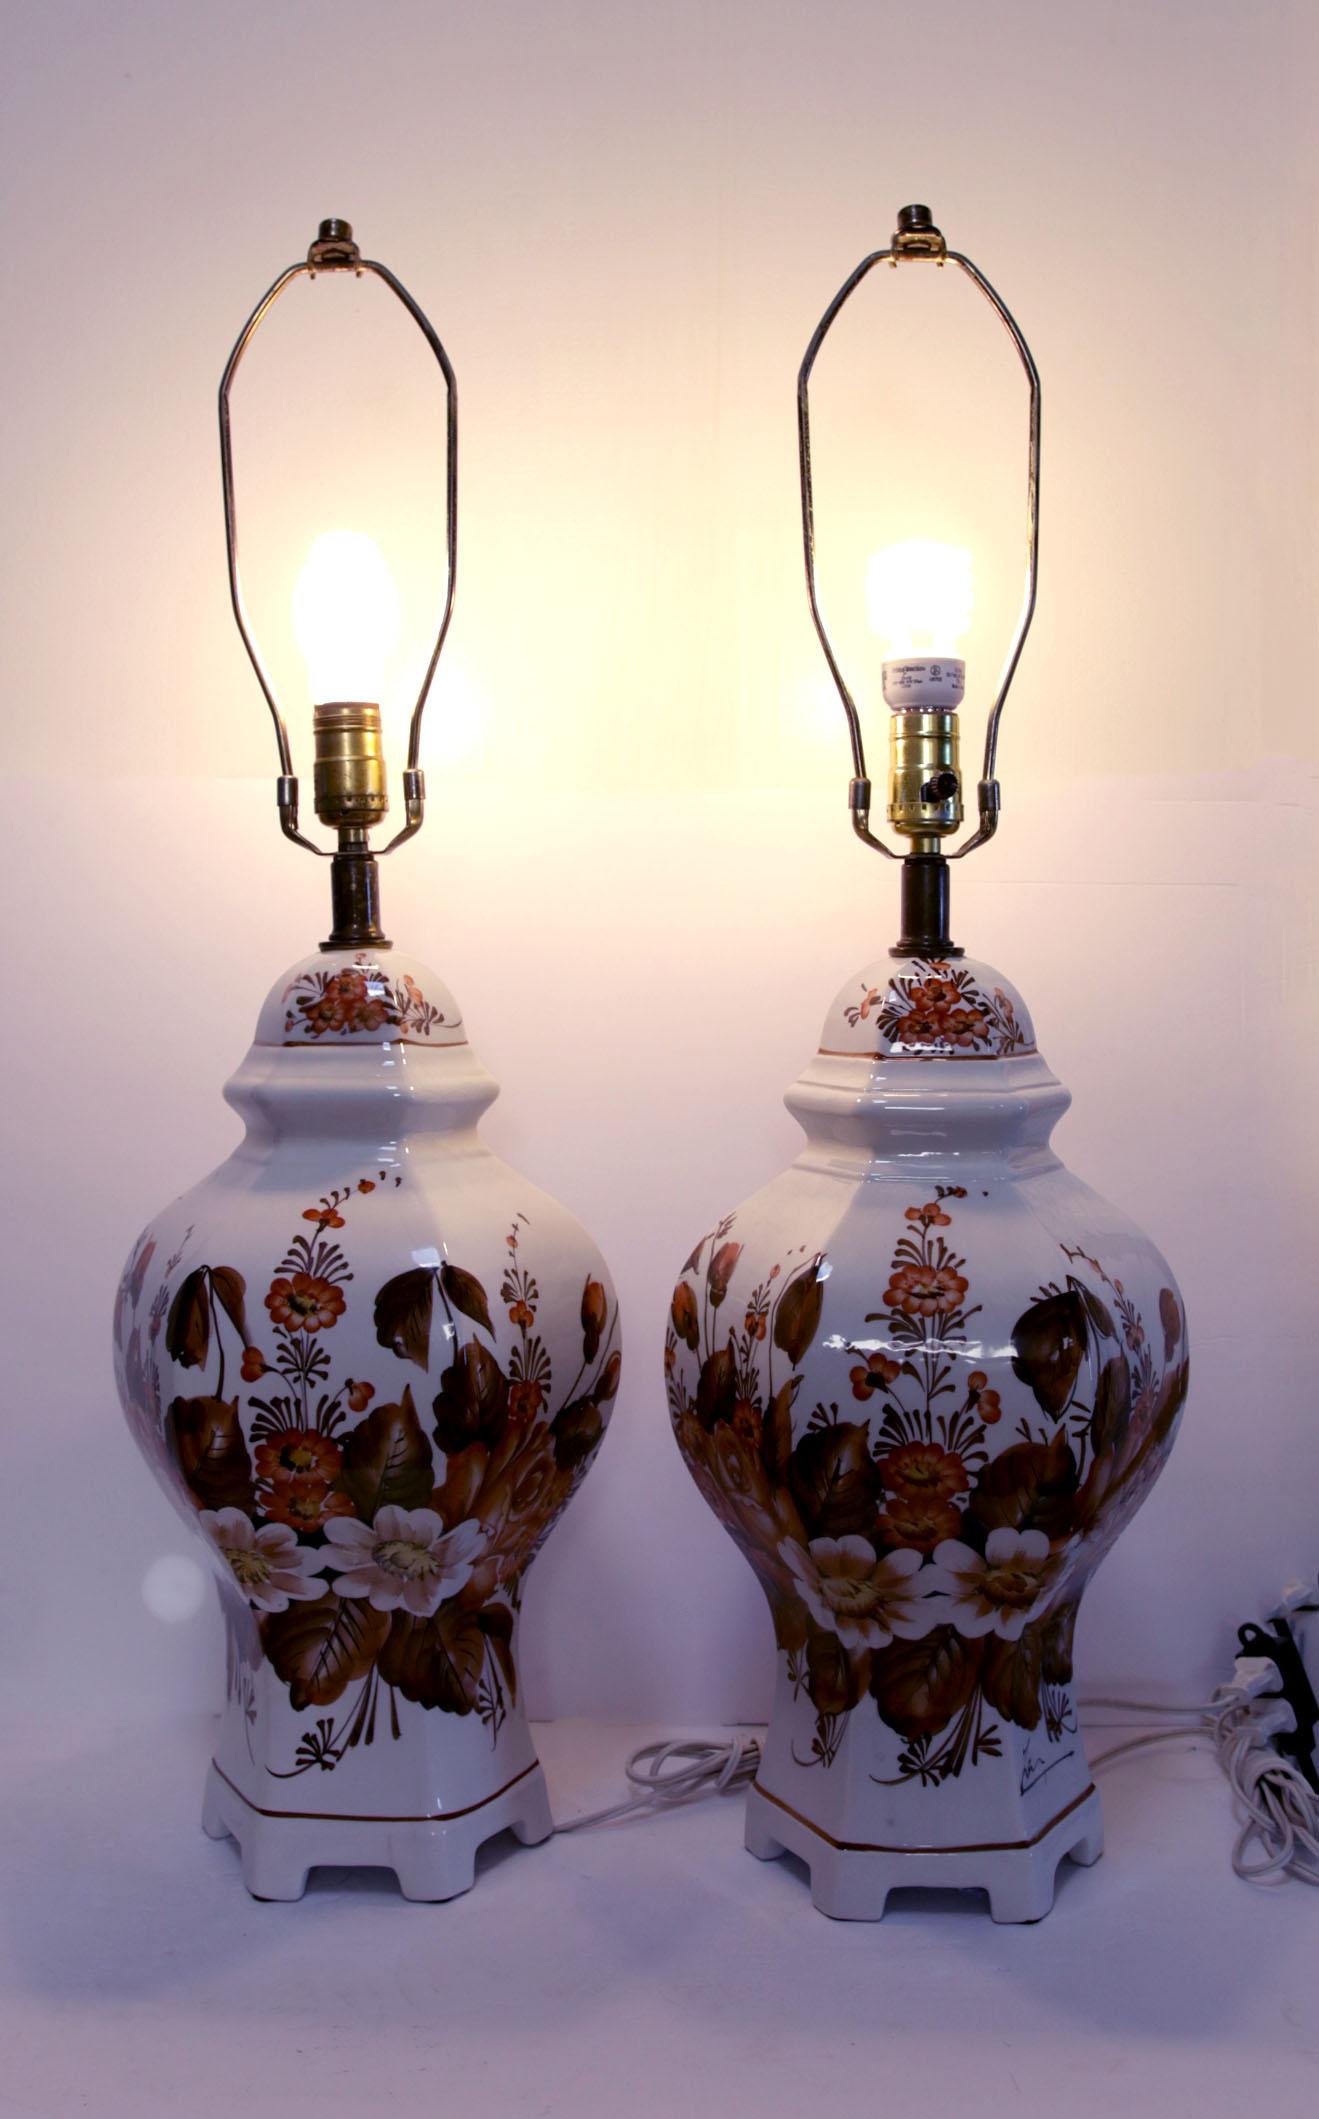 Pair of Signed Antonio Zen Hexagonal Lamps, Made in Italy For Sale 5